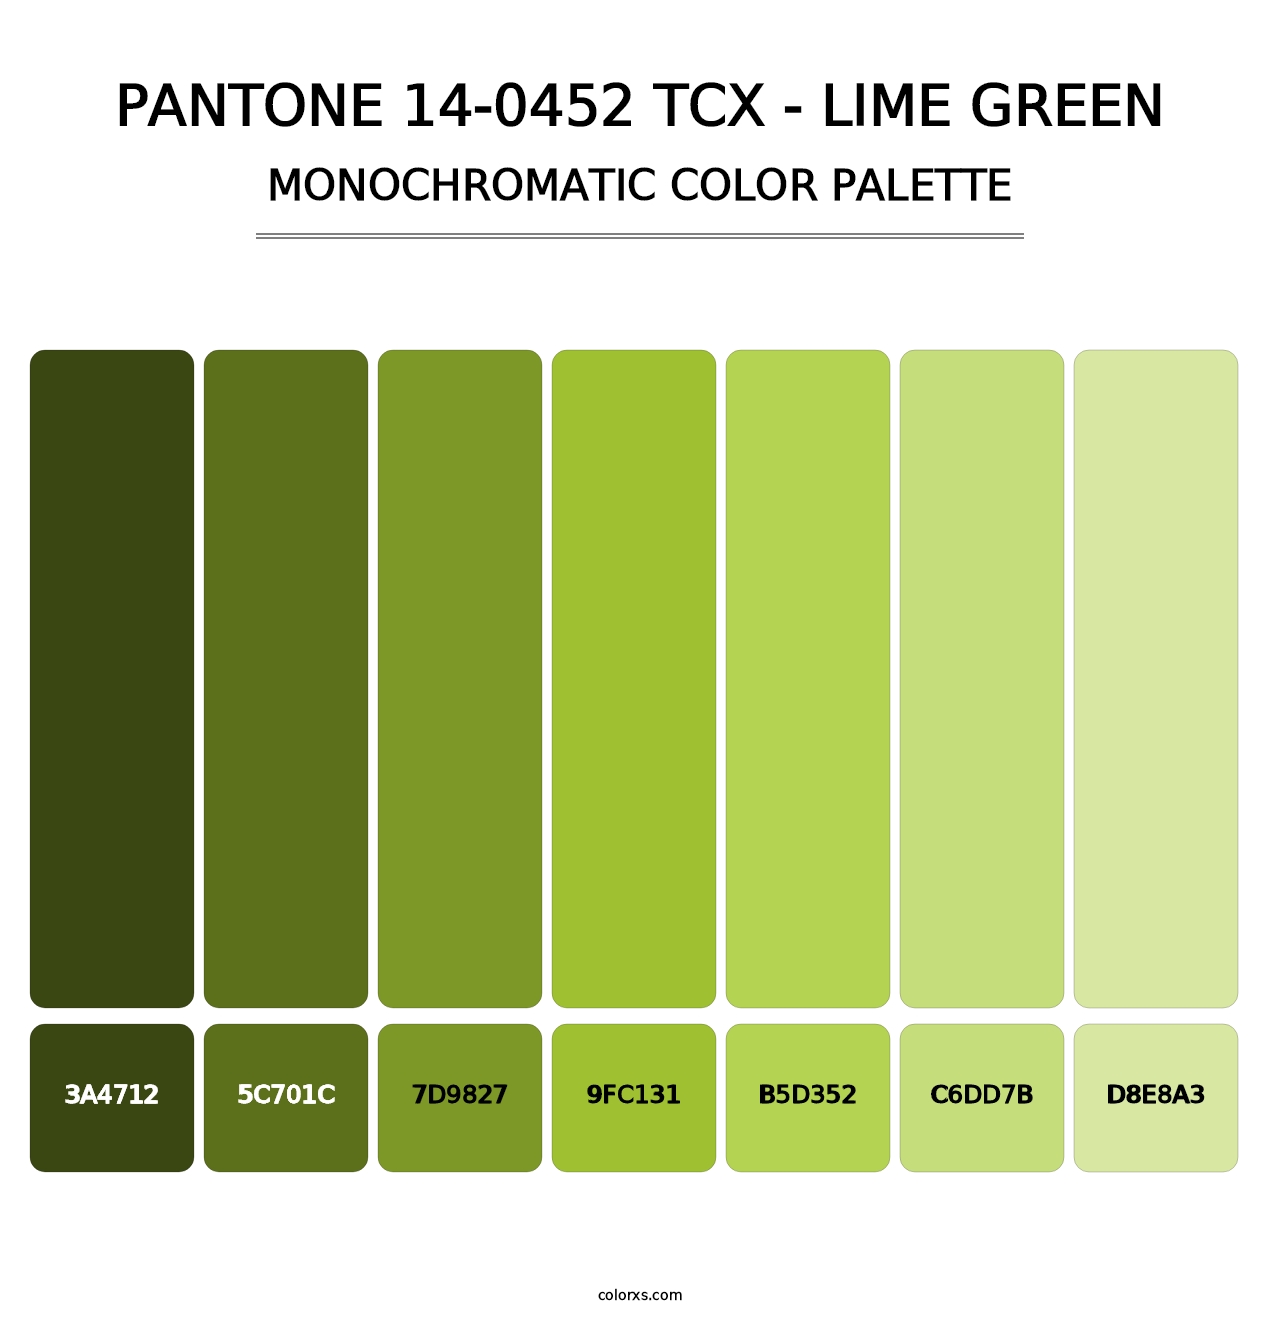 PANTONE 14-0452 TCX - Lime Green - Monochromatic Color Palette